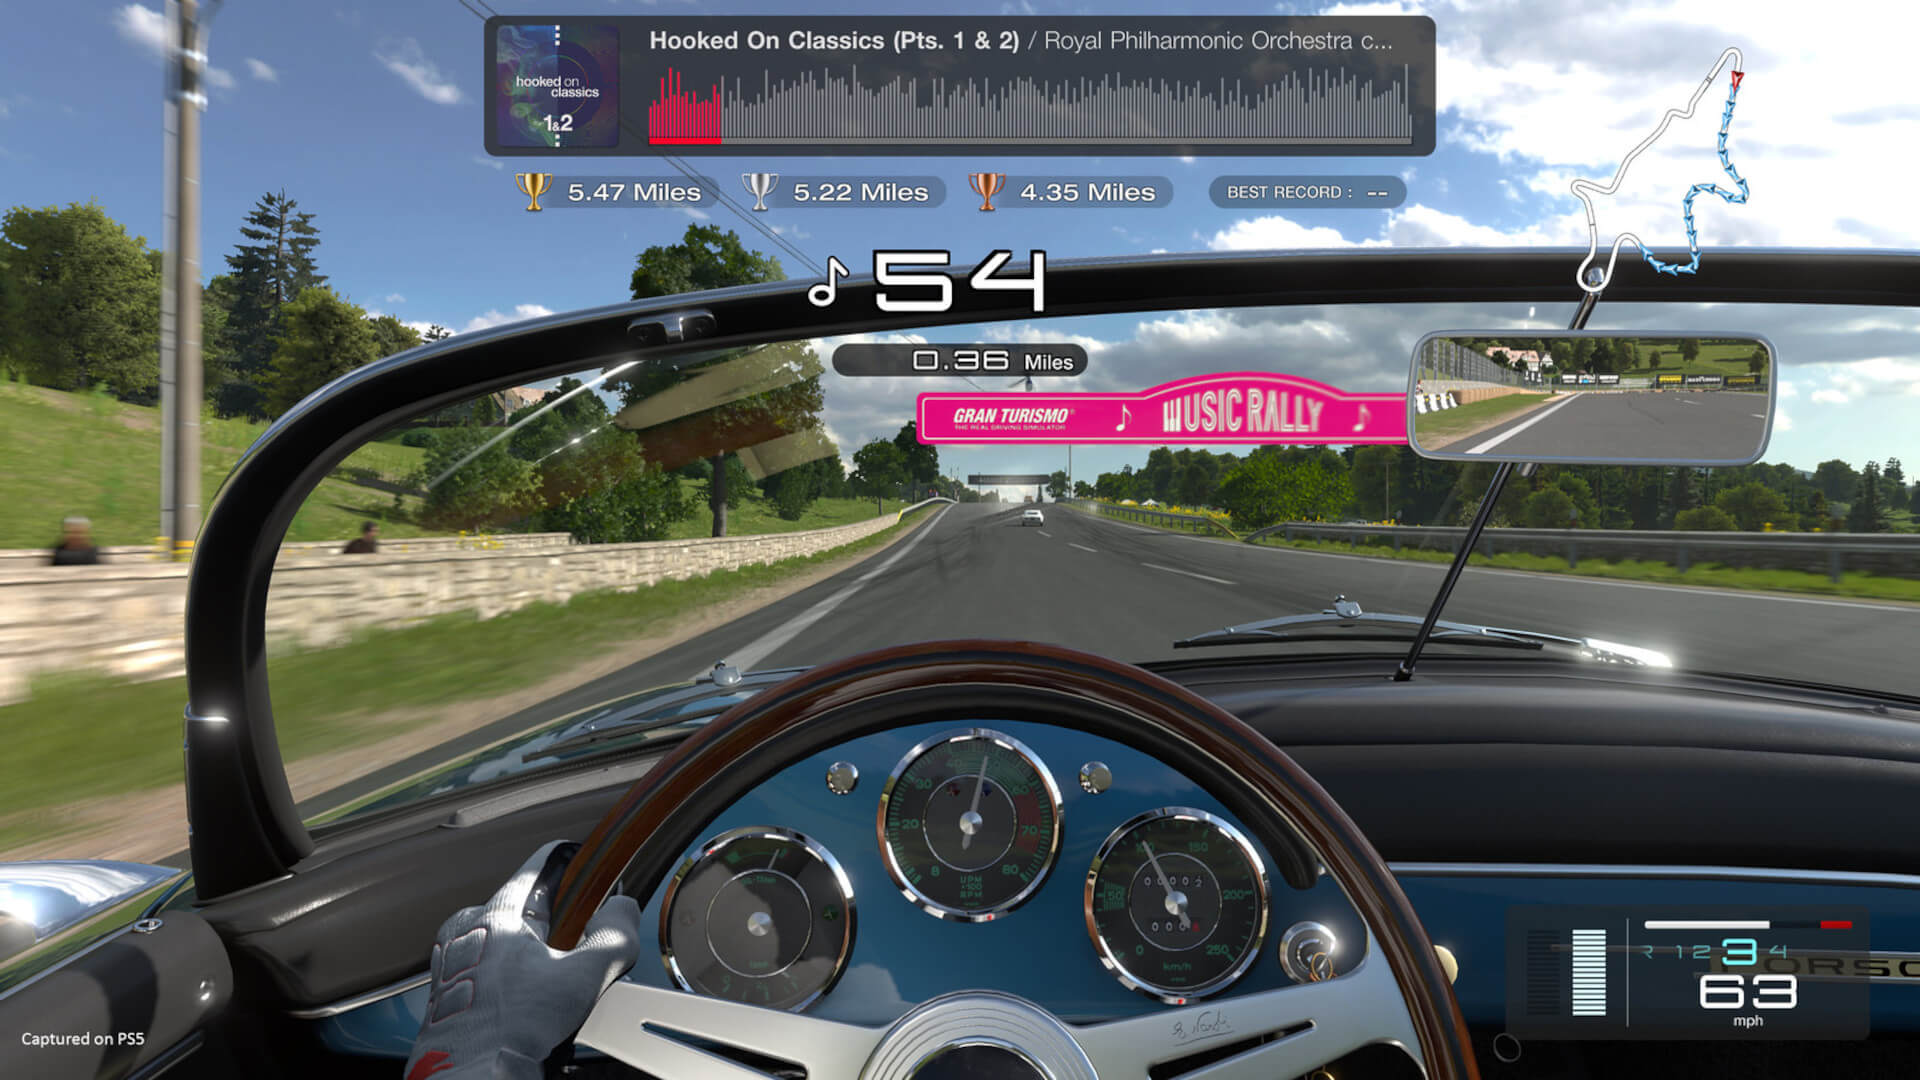 The Music Rally mode in Gran Turismo 7